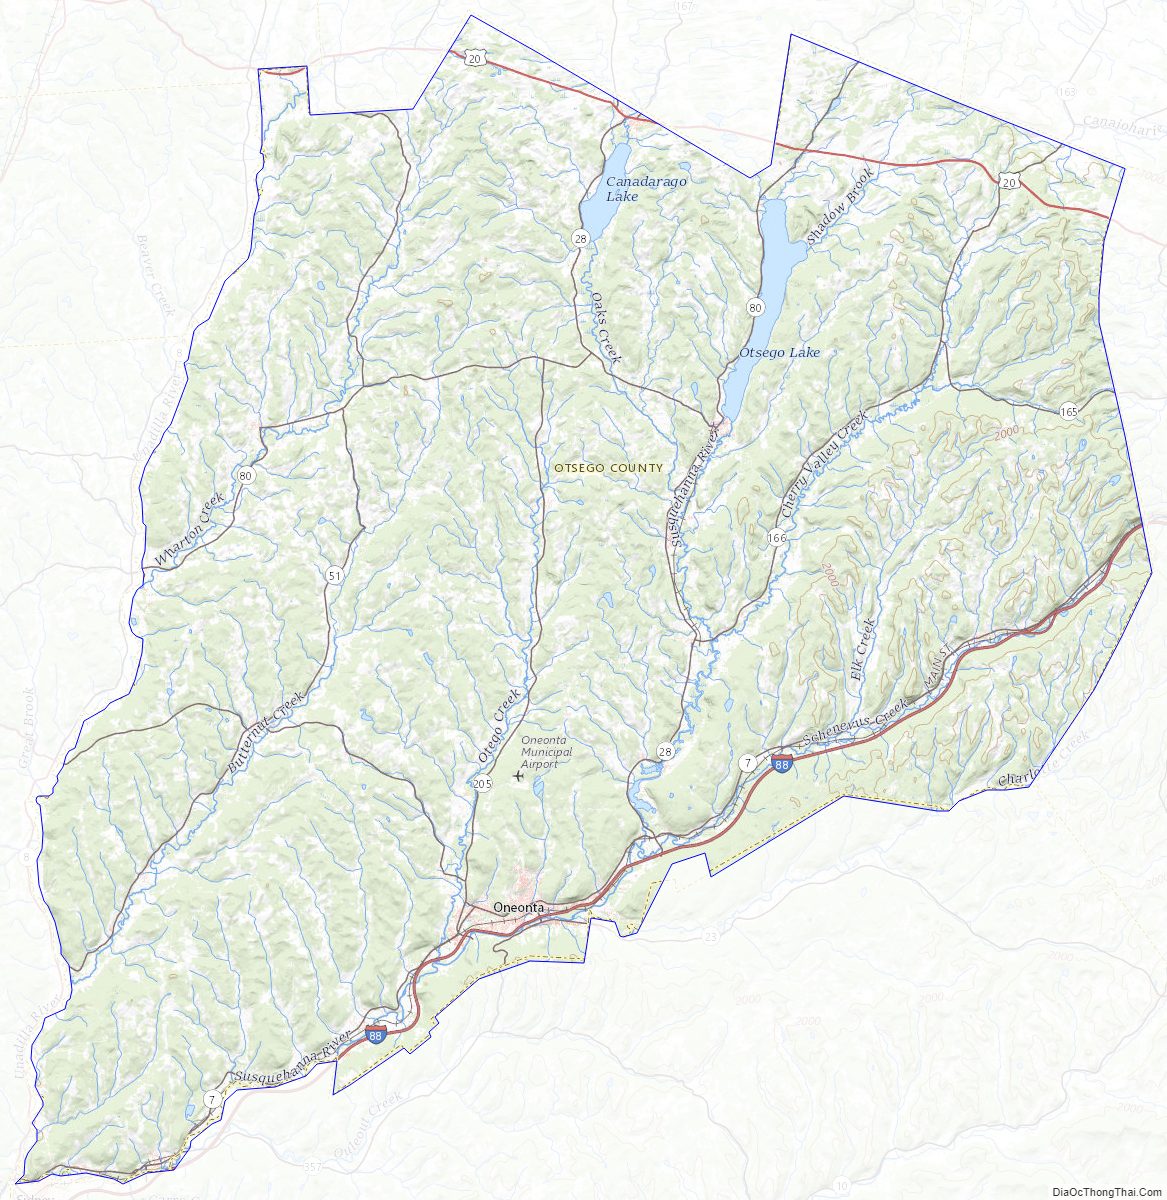 Topographic map of Otsego County, New York